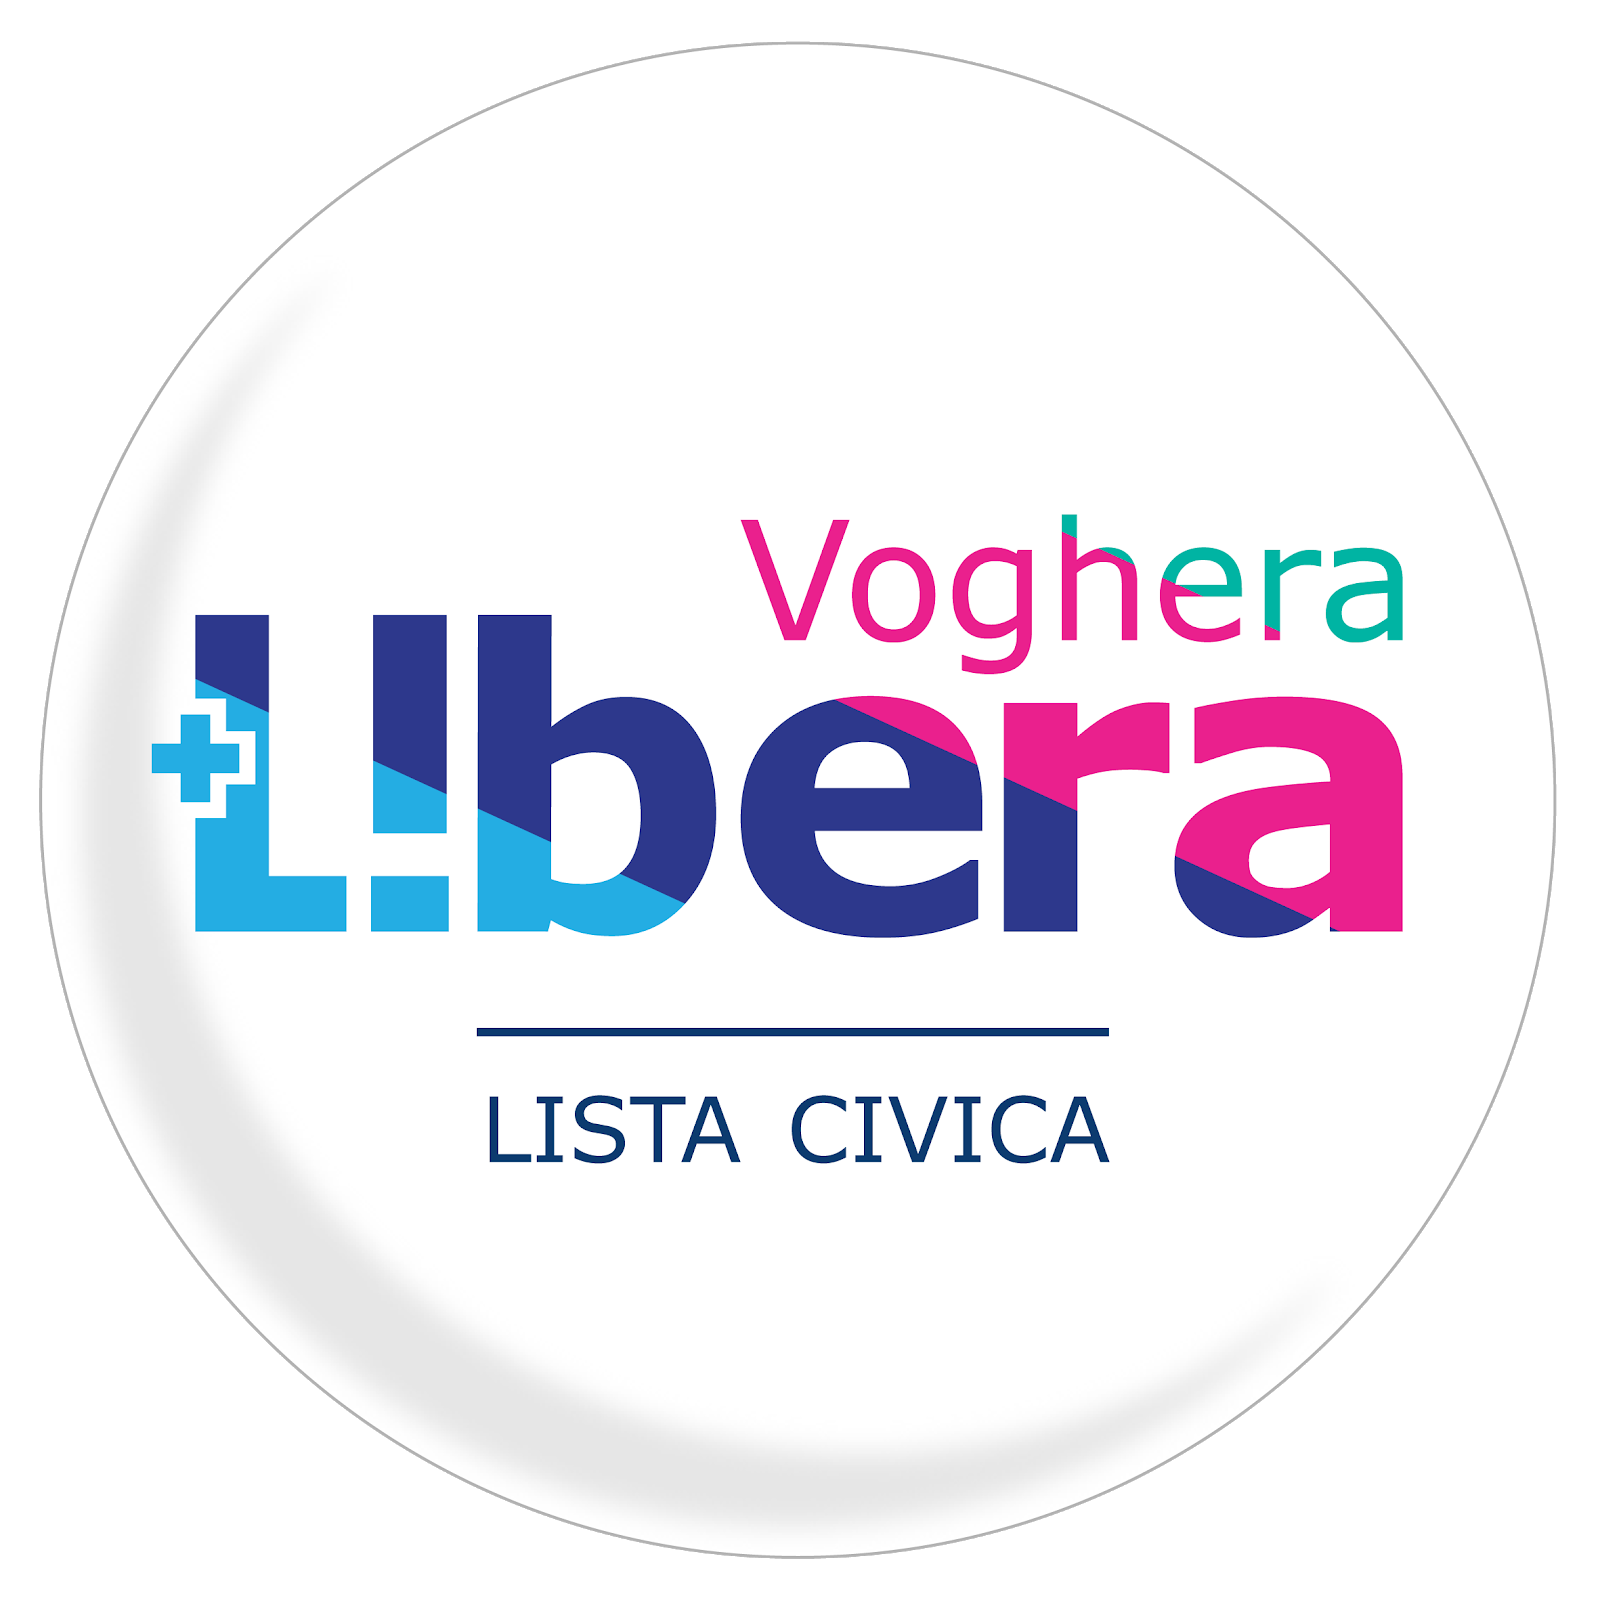 Lista Civica Voghera + Libera